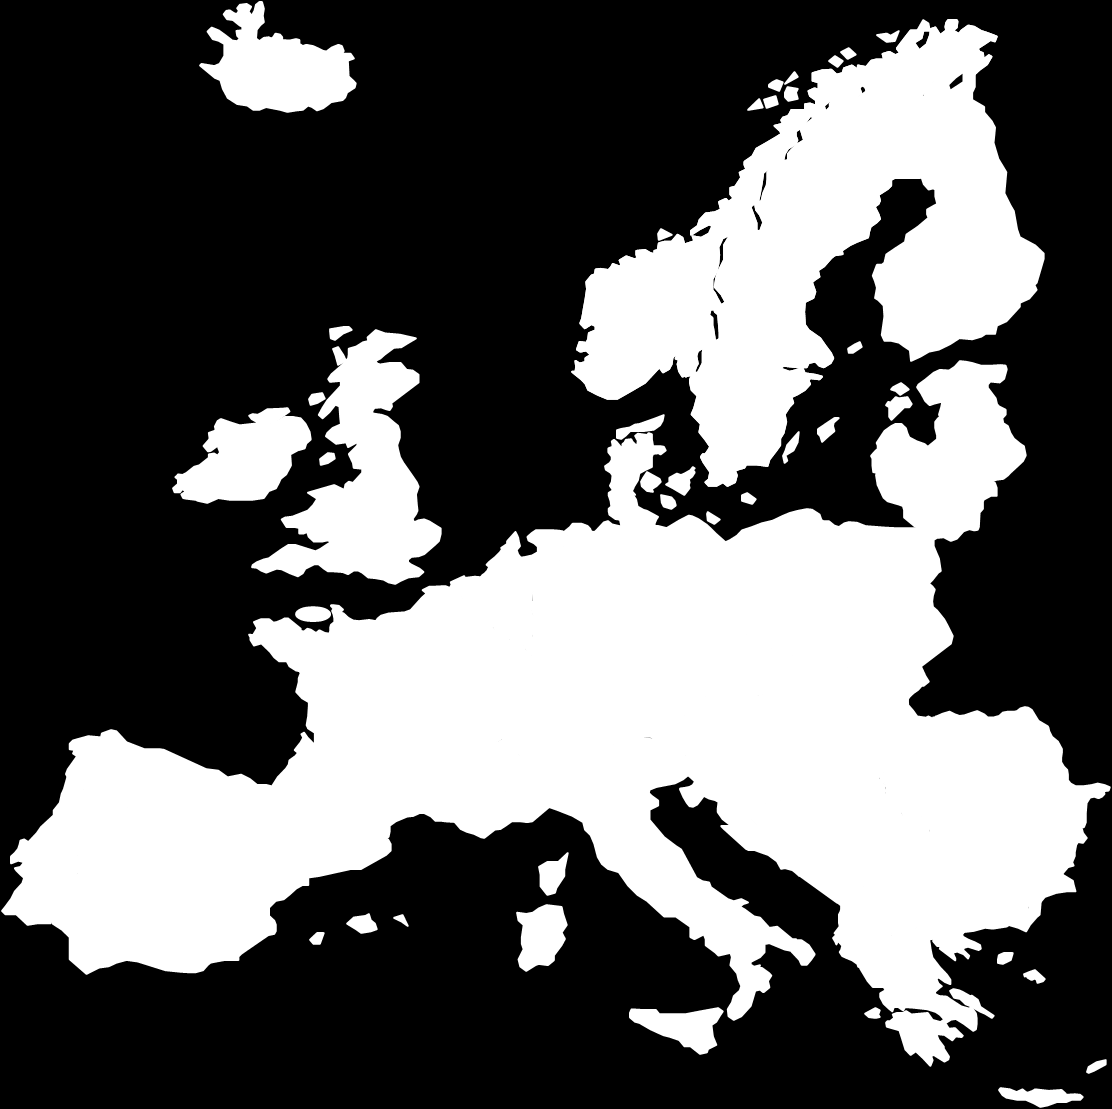 European Union showing